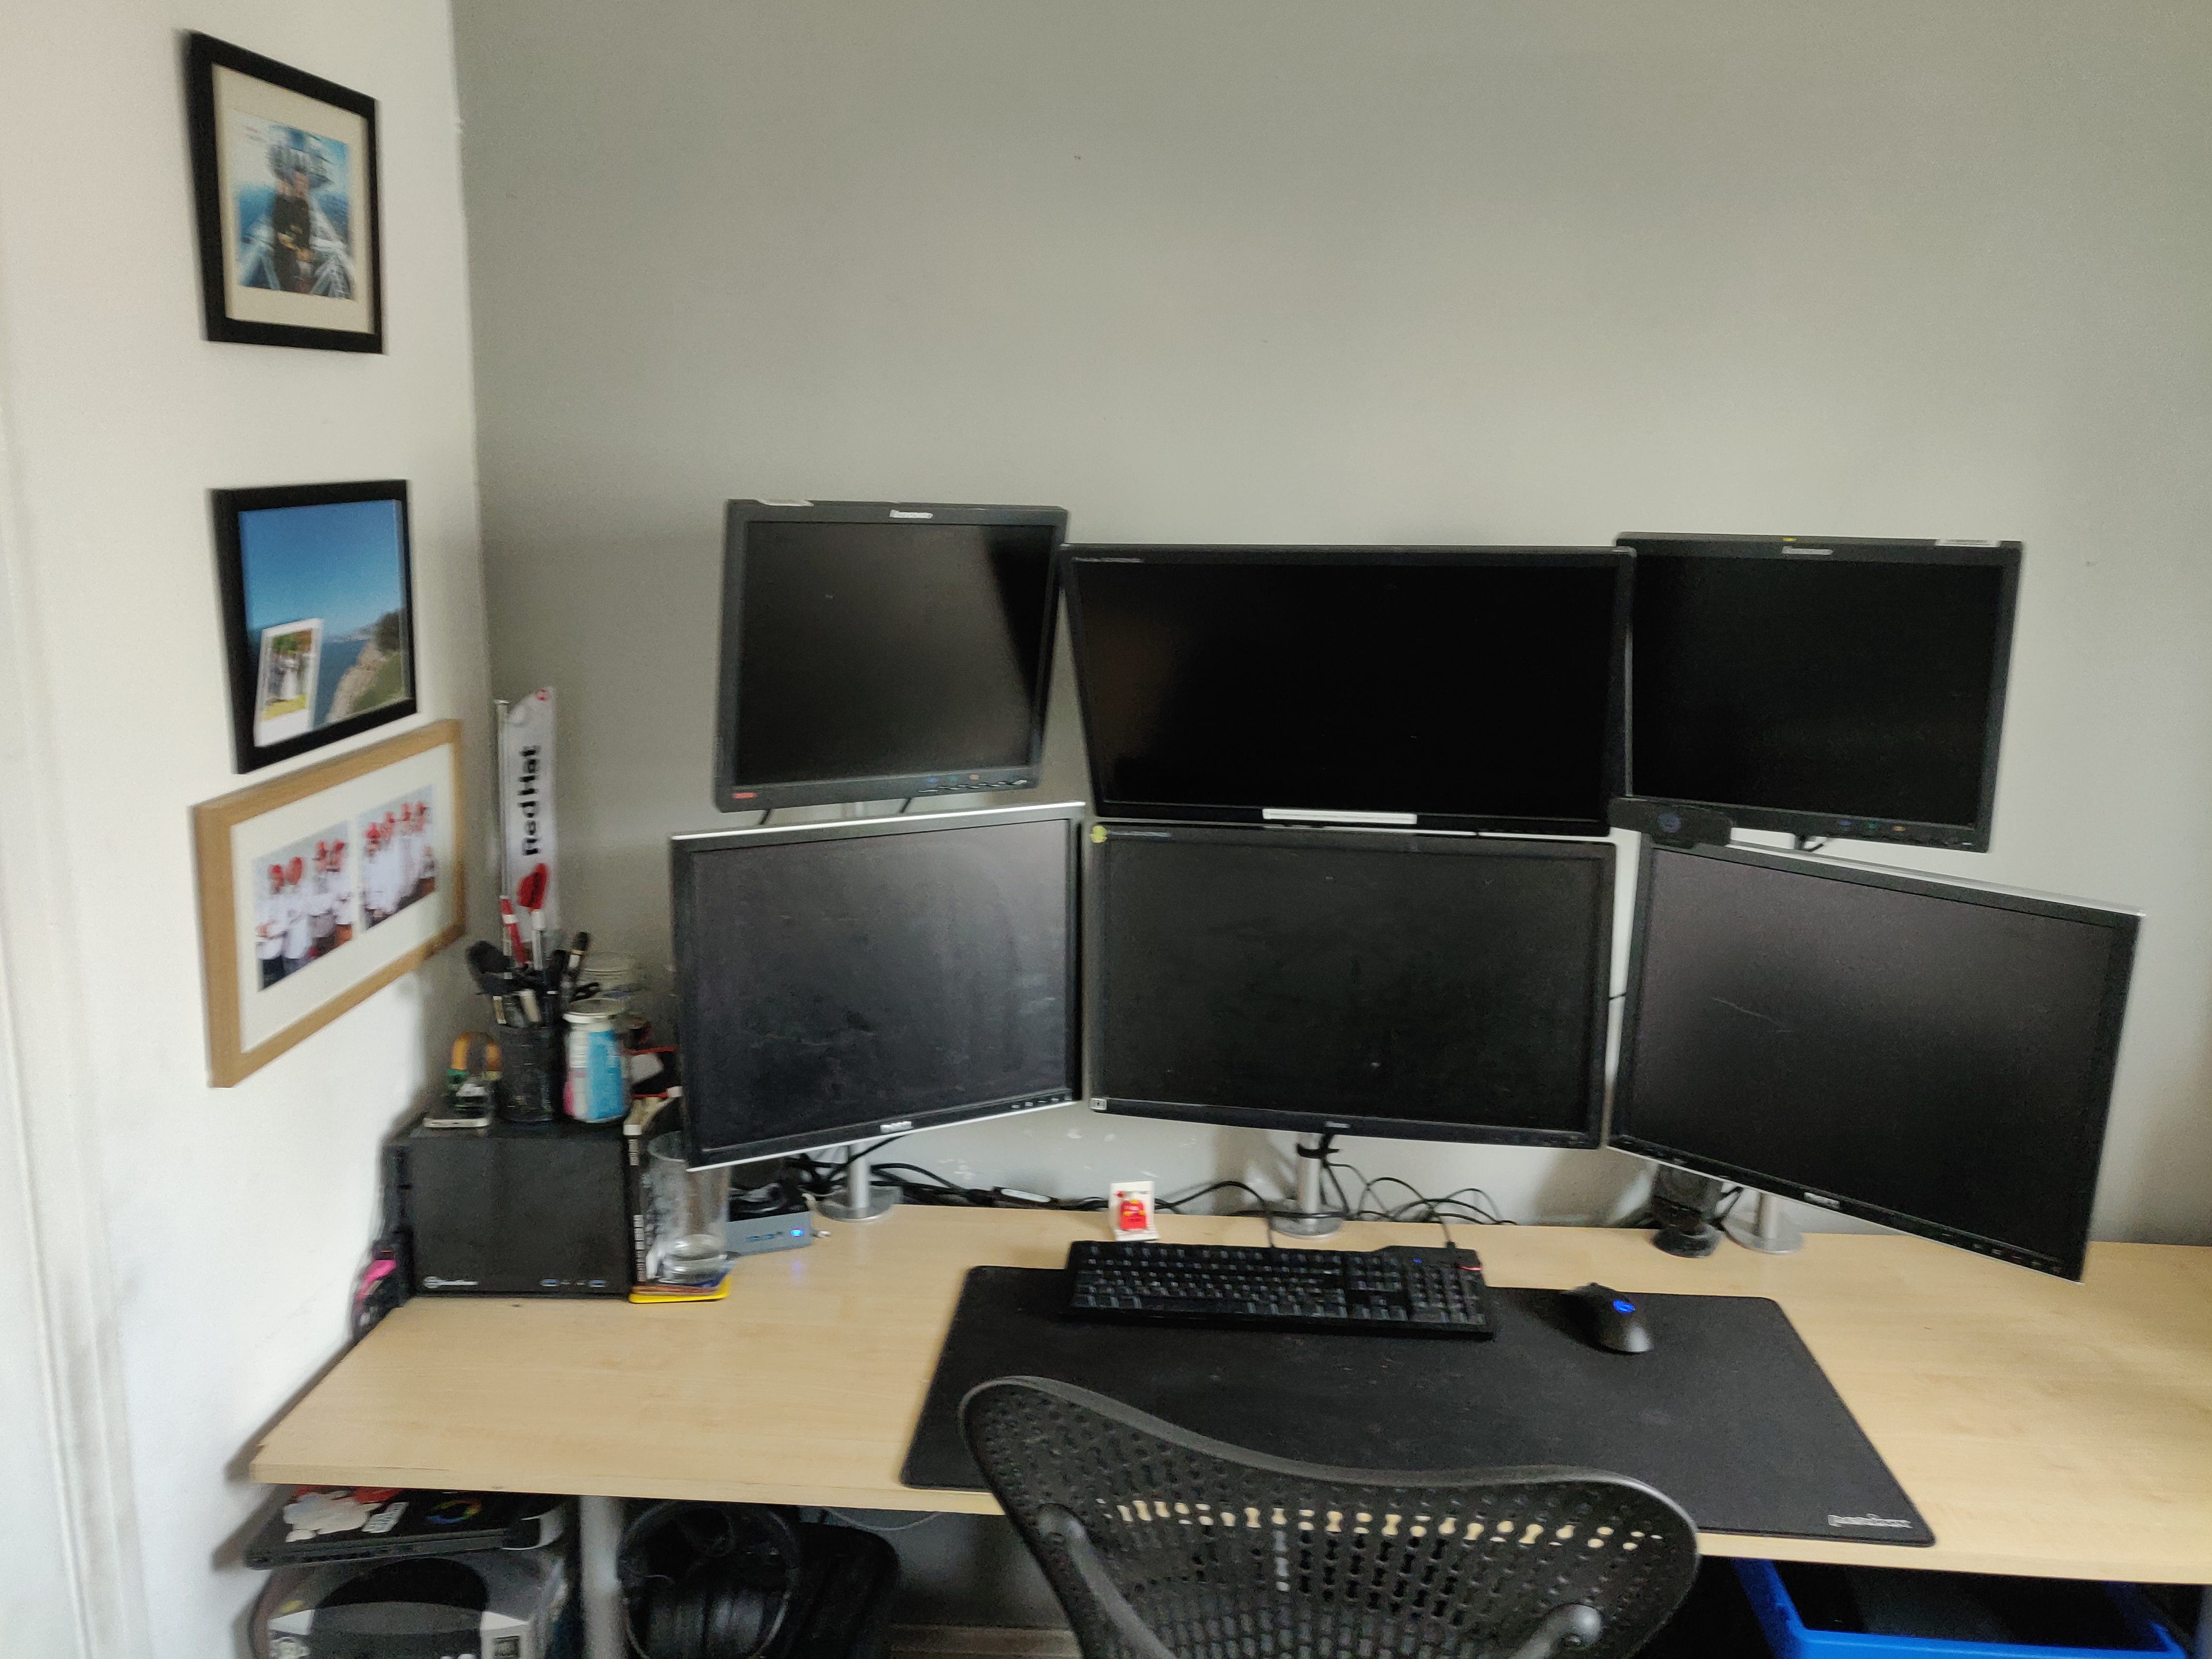 6 monitors.